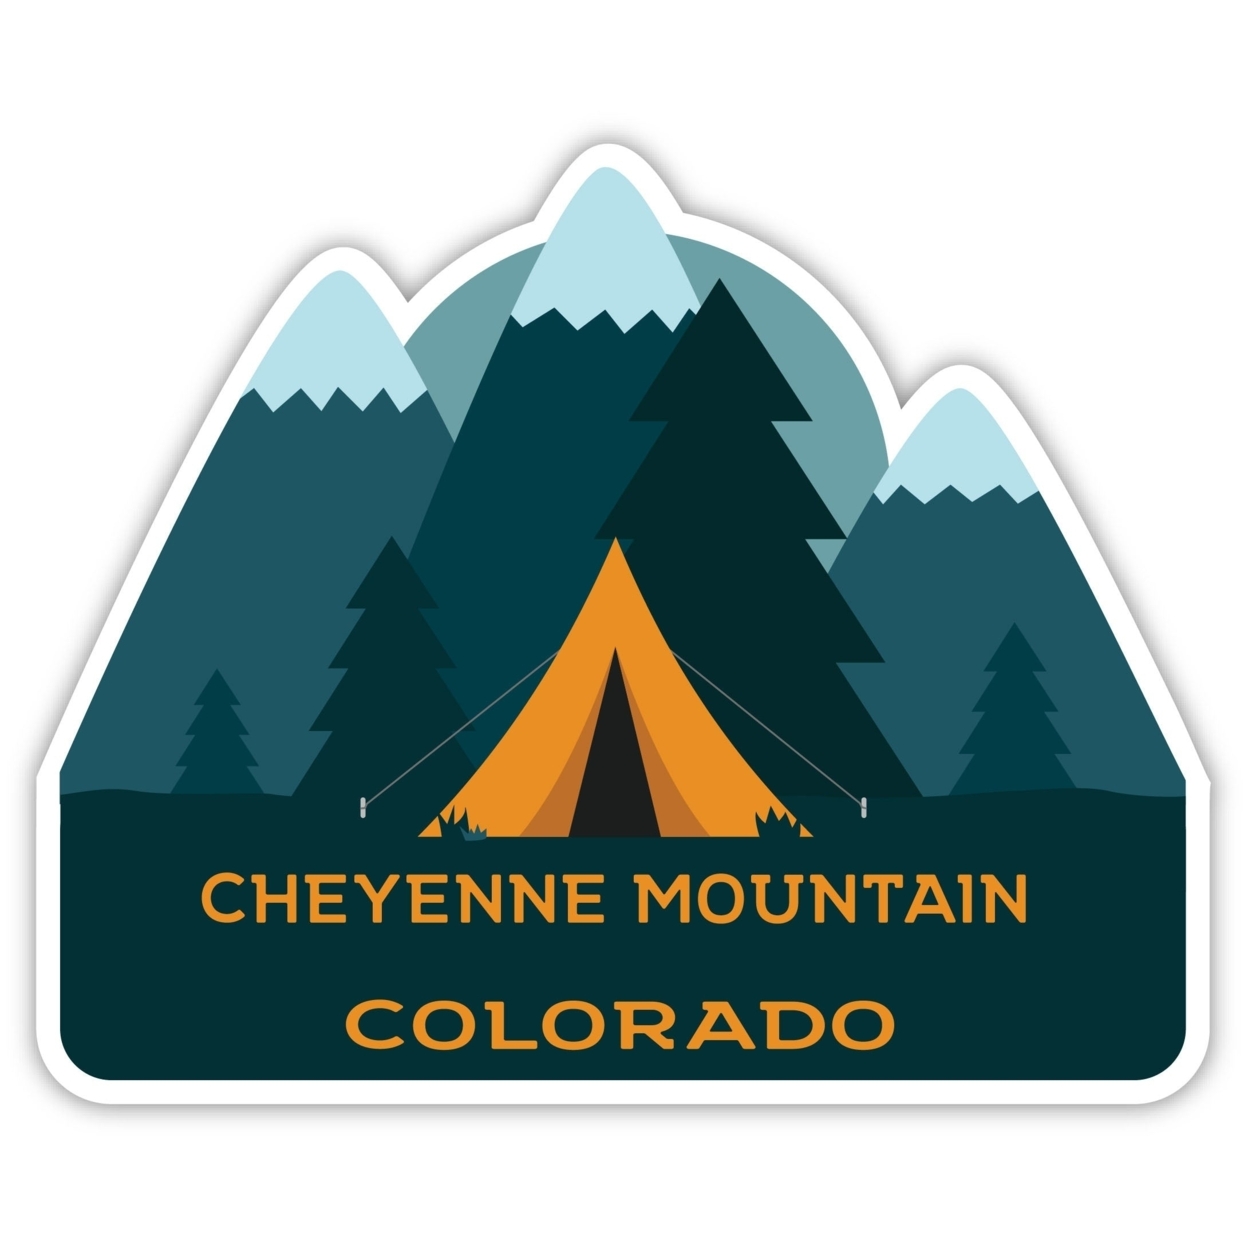 Cheyenne Mountain Colorado Souvenir Decorative Stickers (Choose Theme And Size) - Single Unit, 8-Inch, Tent